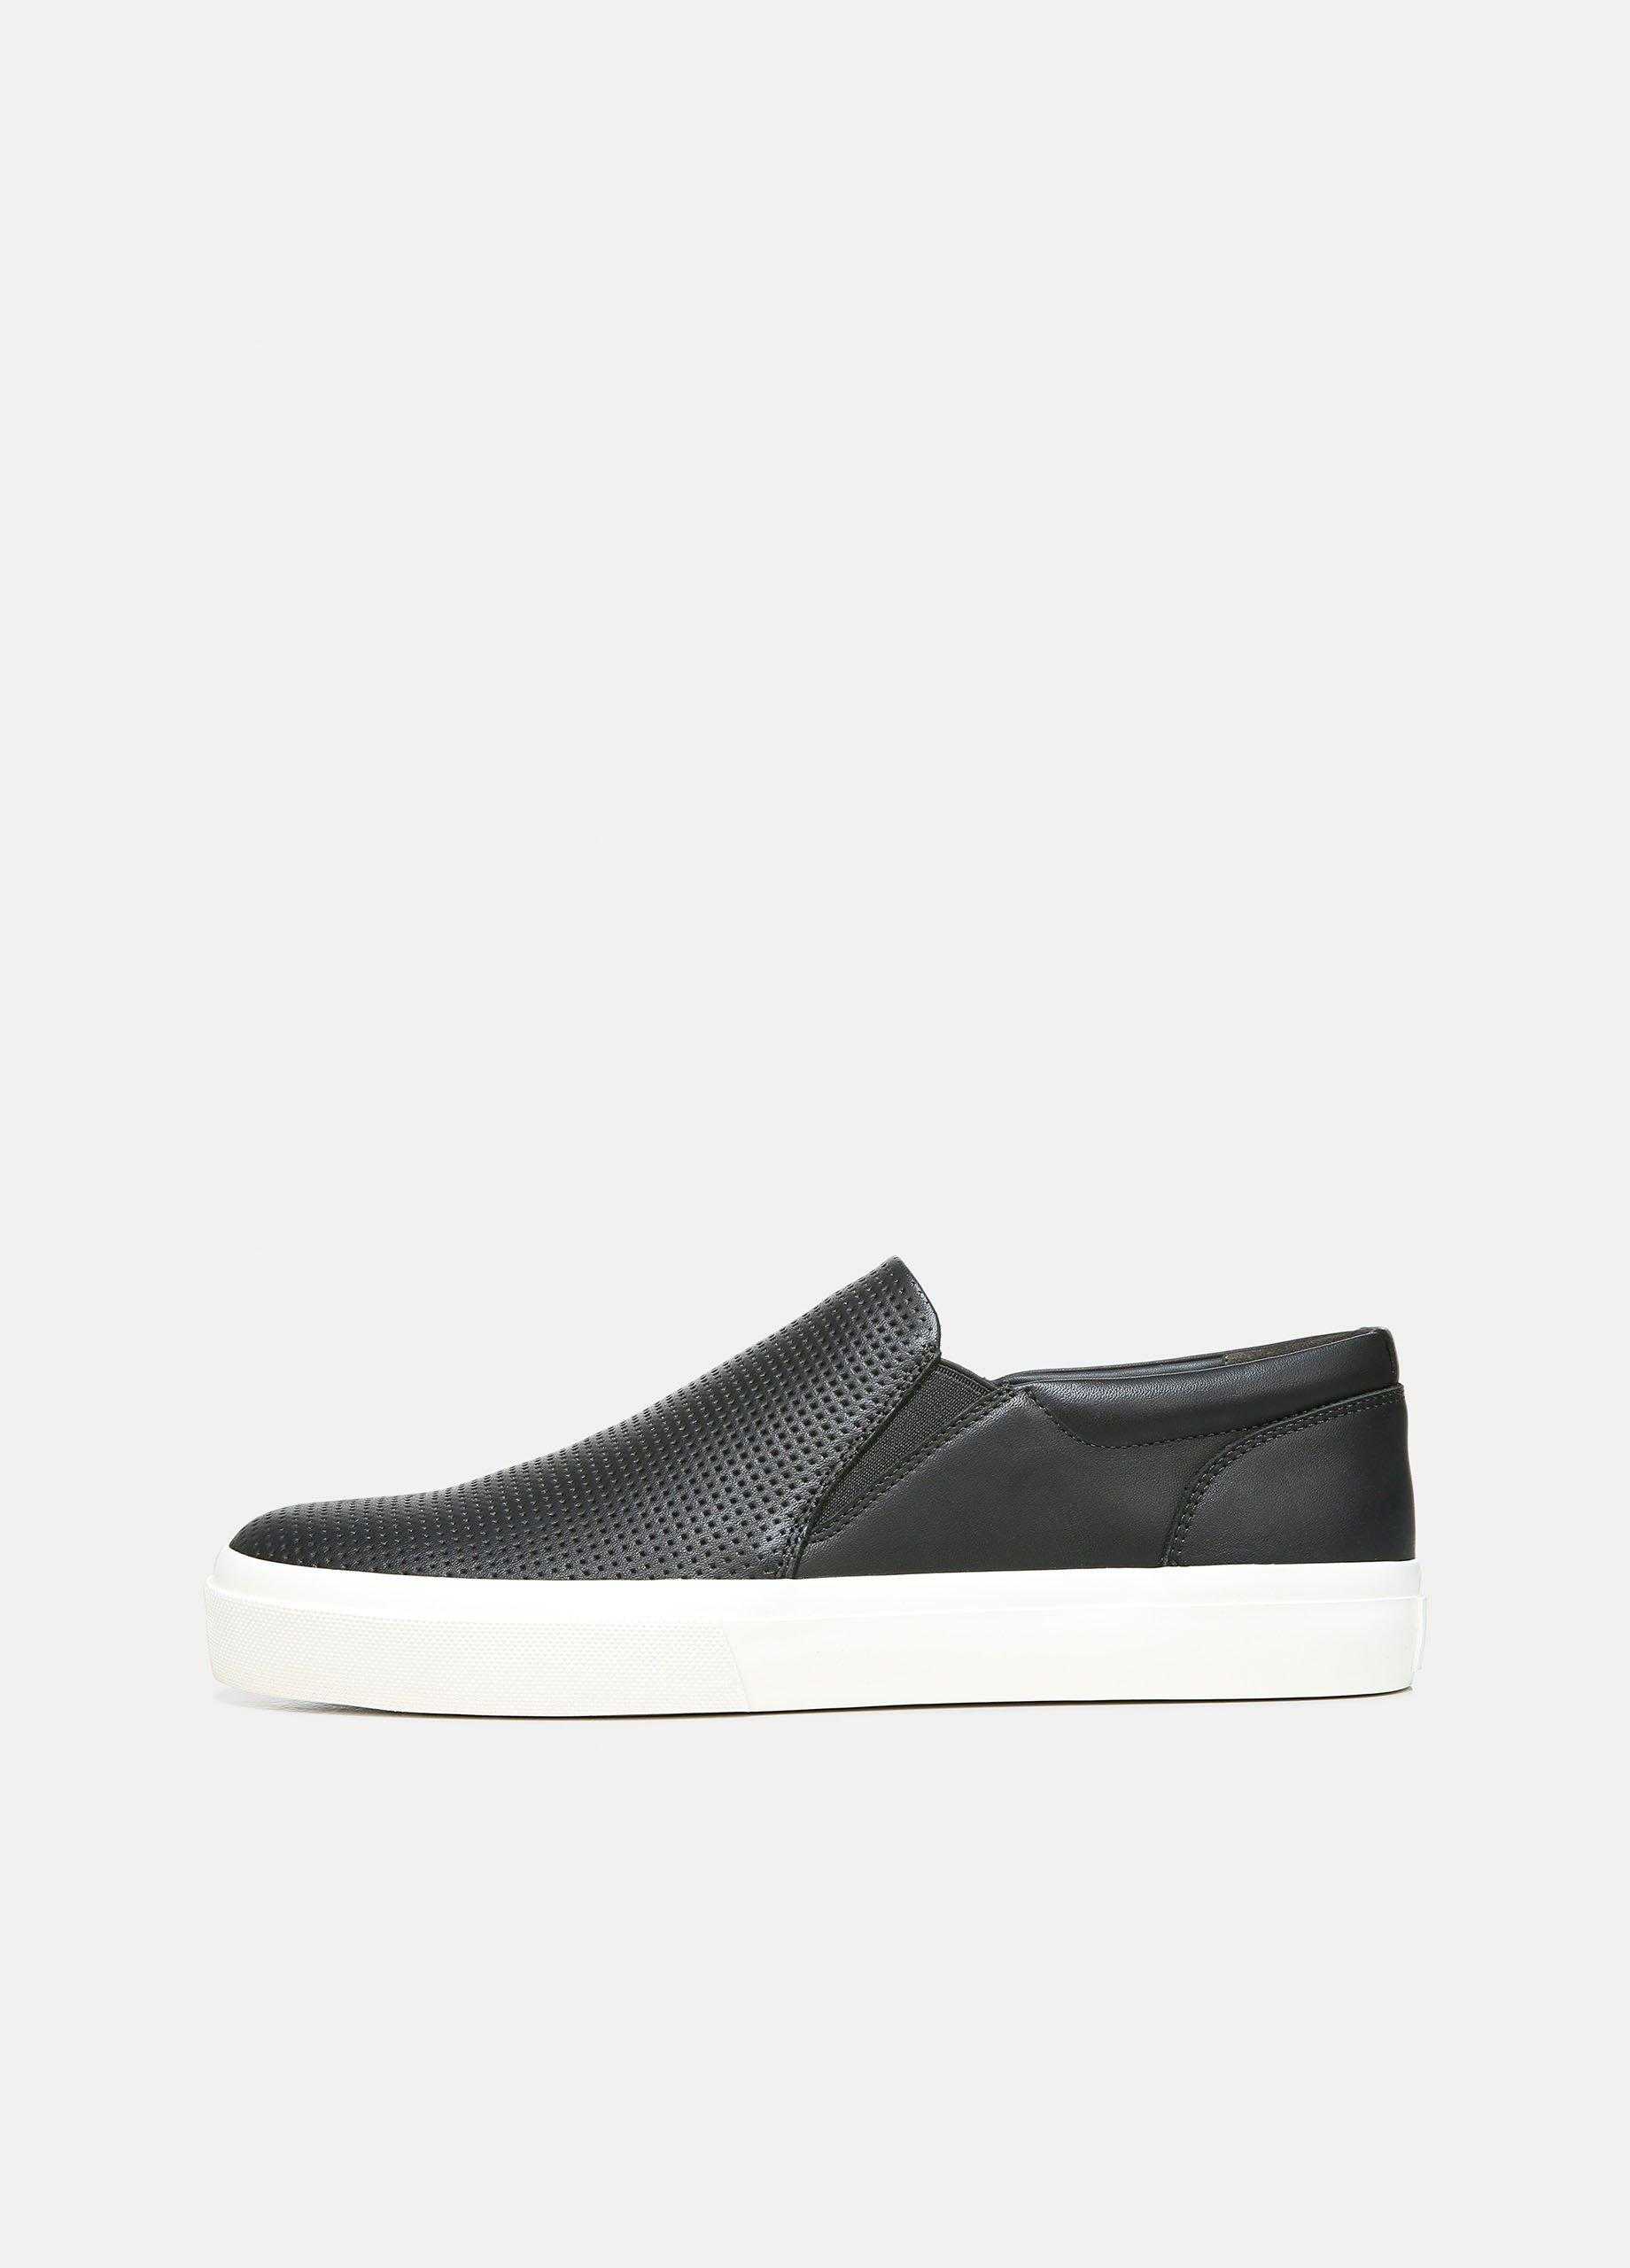 Fletcher Leather Sneaker, Black, Size 9 Vince